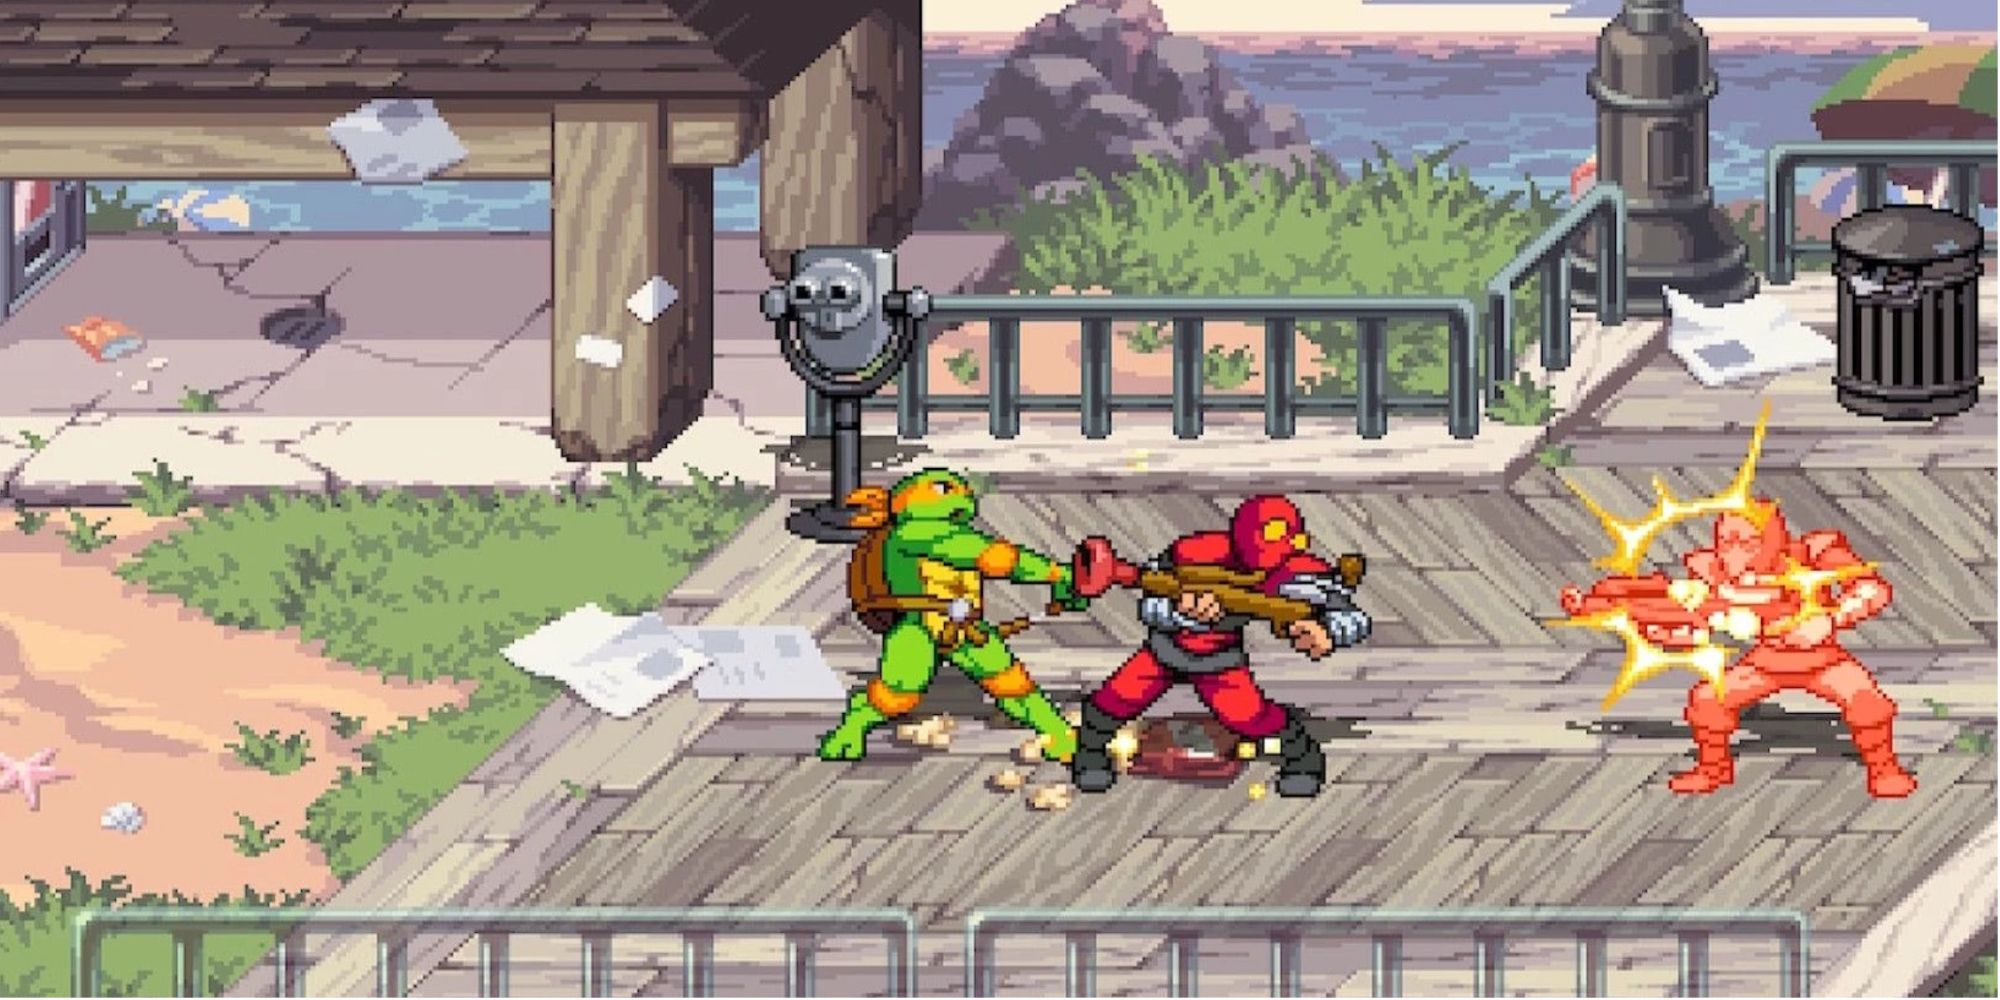 Michelangelo in Teenage Mutant Ninja Turtles: Shredder's Revenge